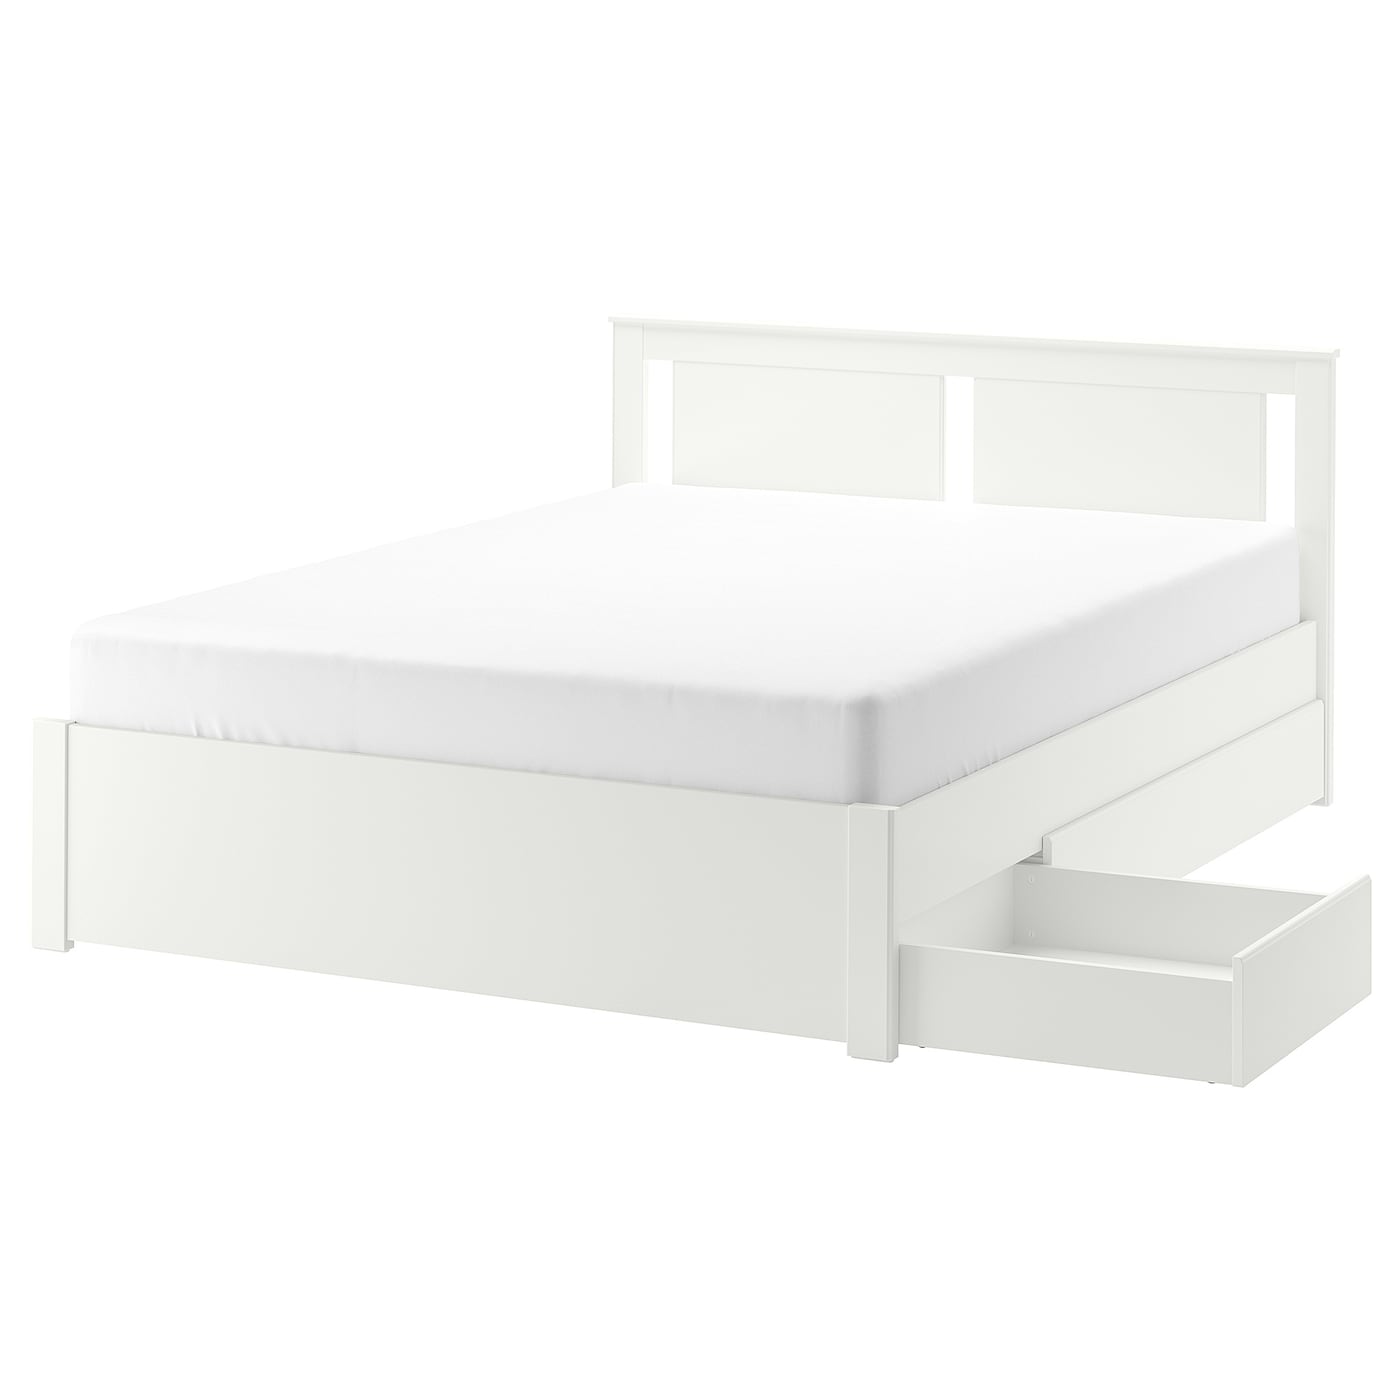 Каркас кровати с 2 ящиками для хранения - IKEA SONGESAND, 200х140 см, белый, СОНГЕСАНД ИКЕА